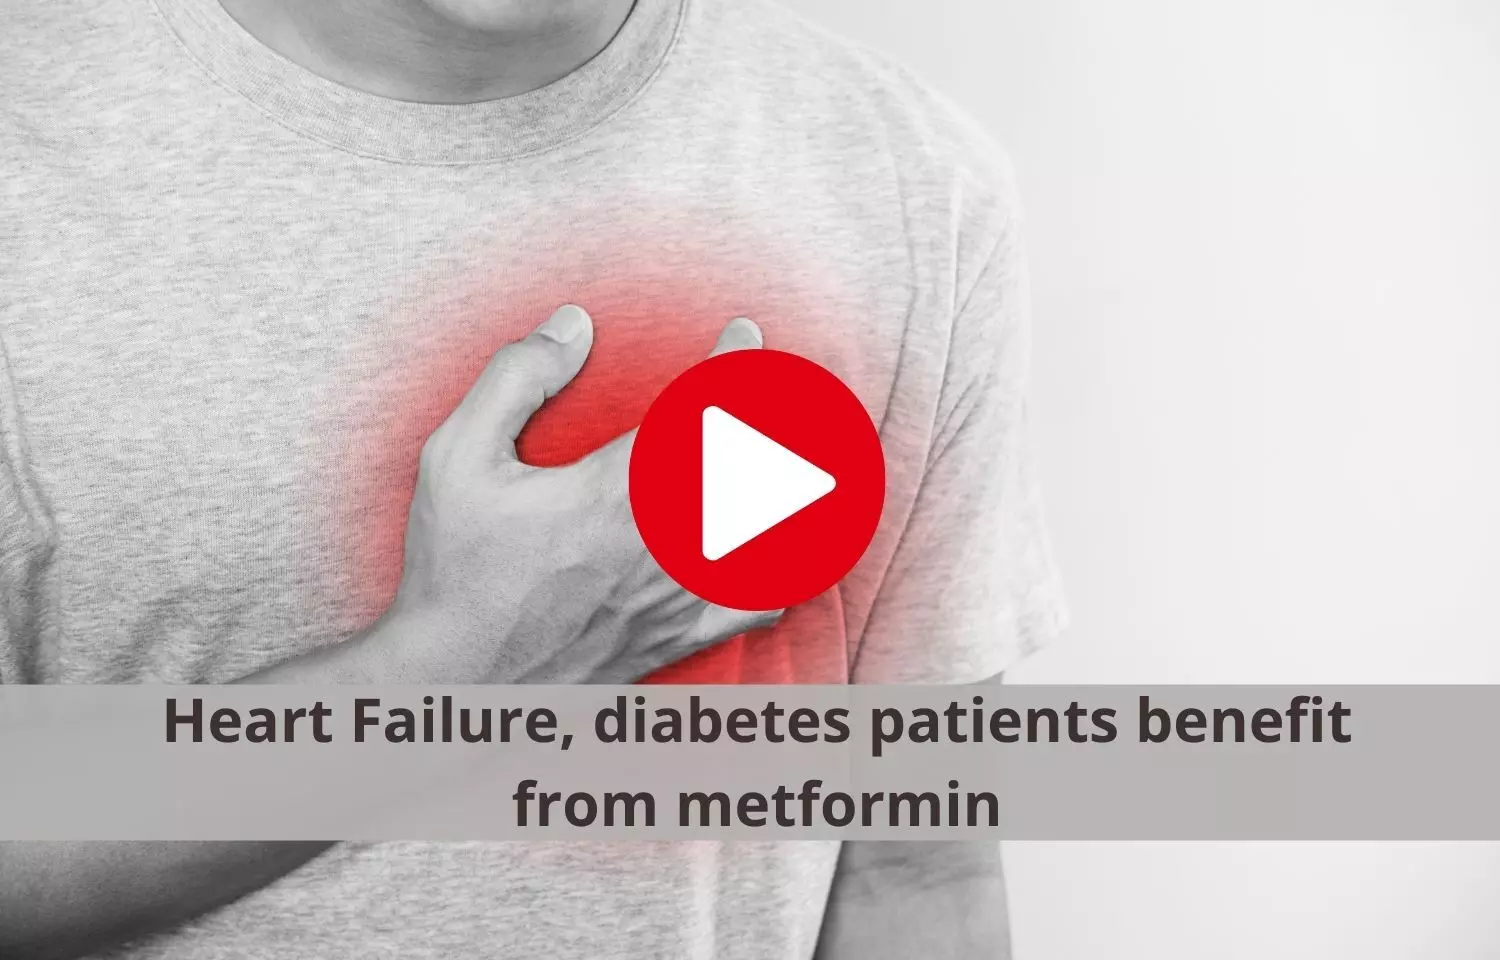 Heart Failure, diabetes patients benefit from metformin